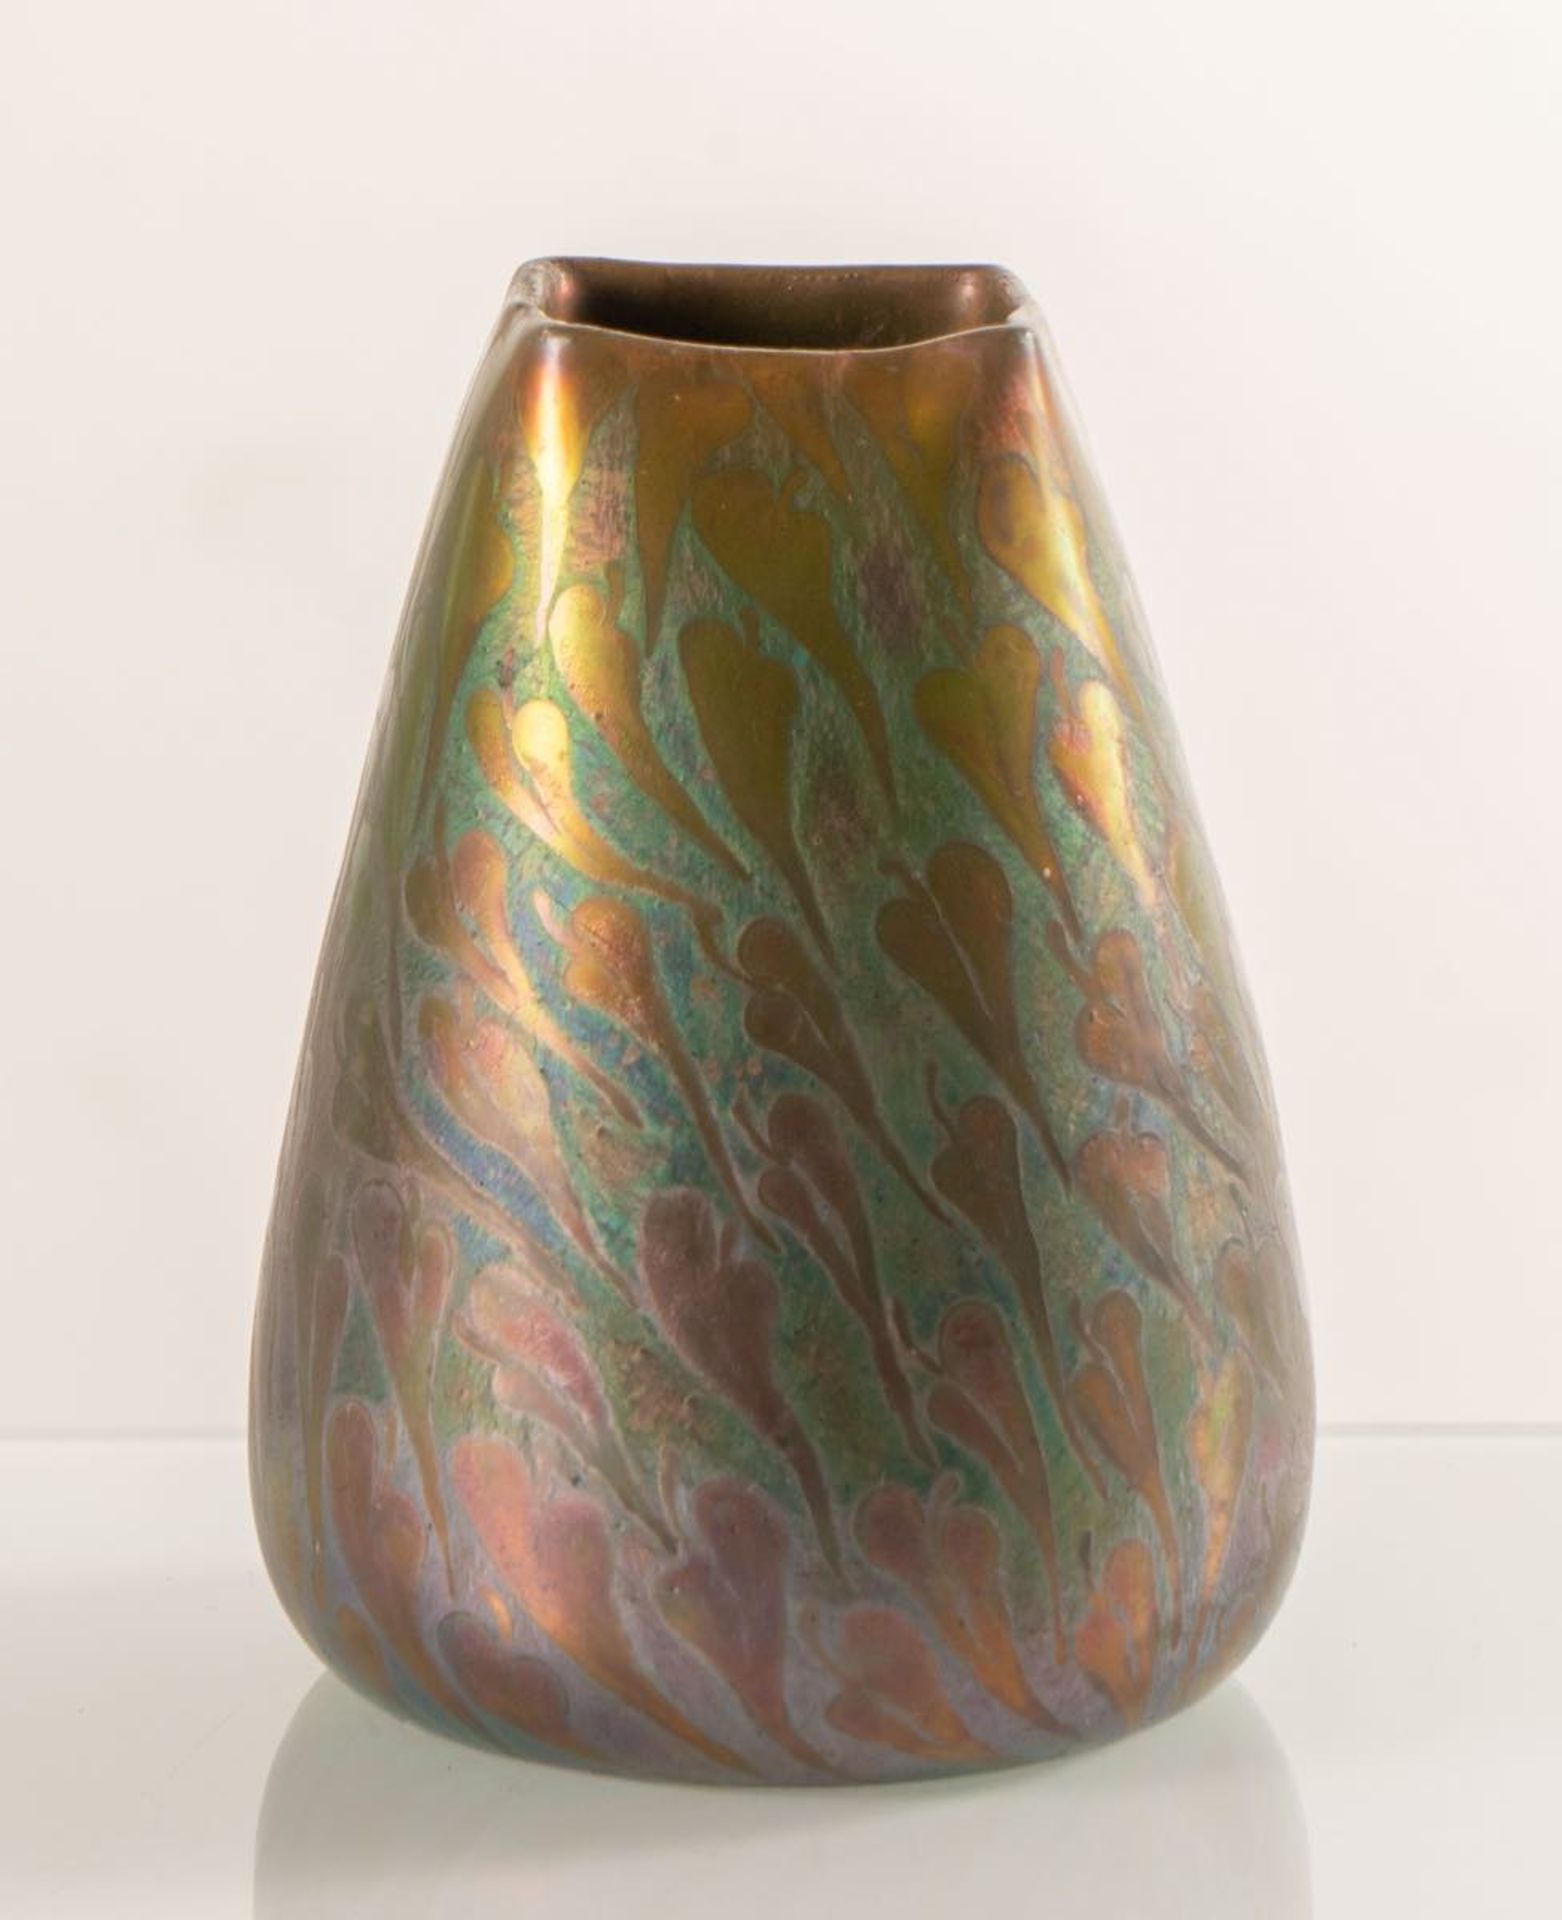 Clément Massier, Piccolo vaso piriforme in ceramica, 1890 - 1910.Imboccatura quadrata, superficie